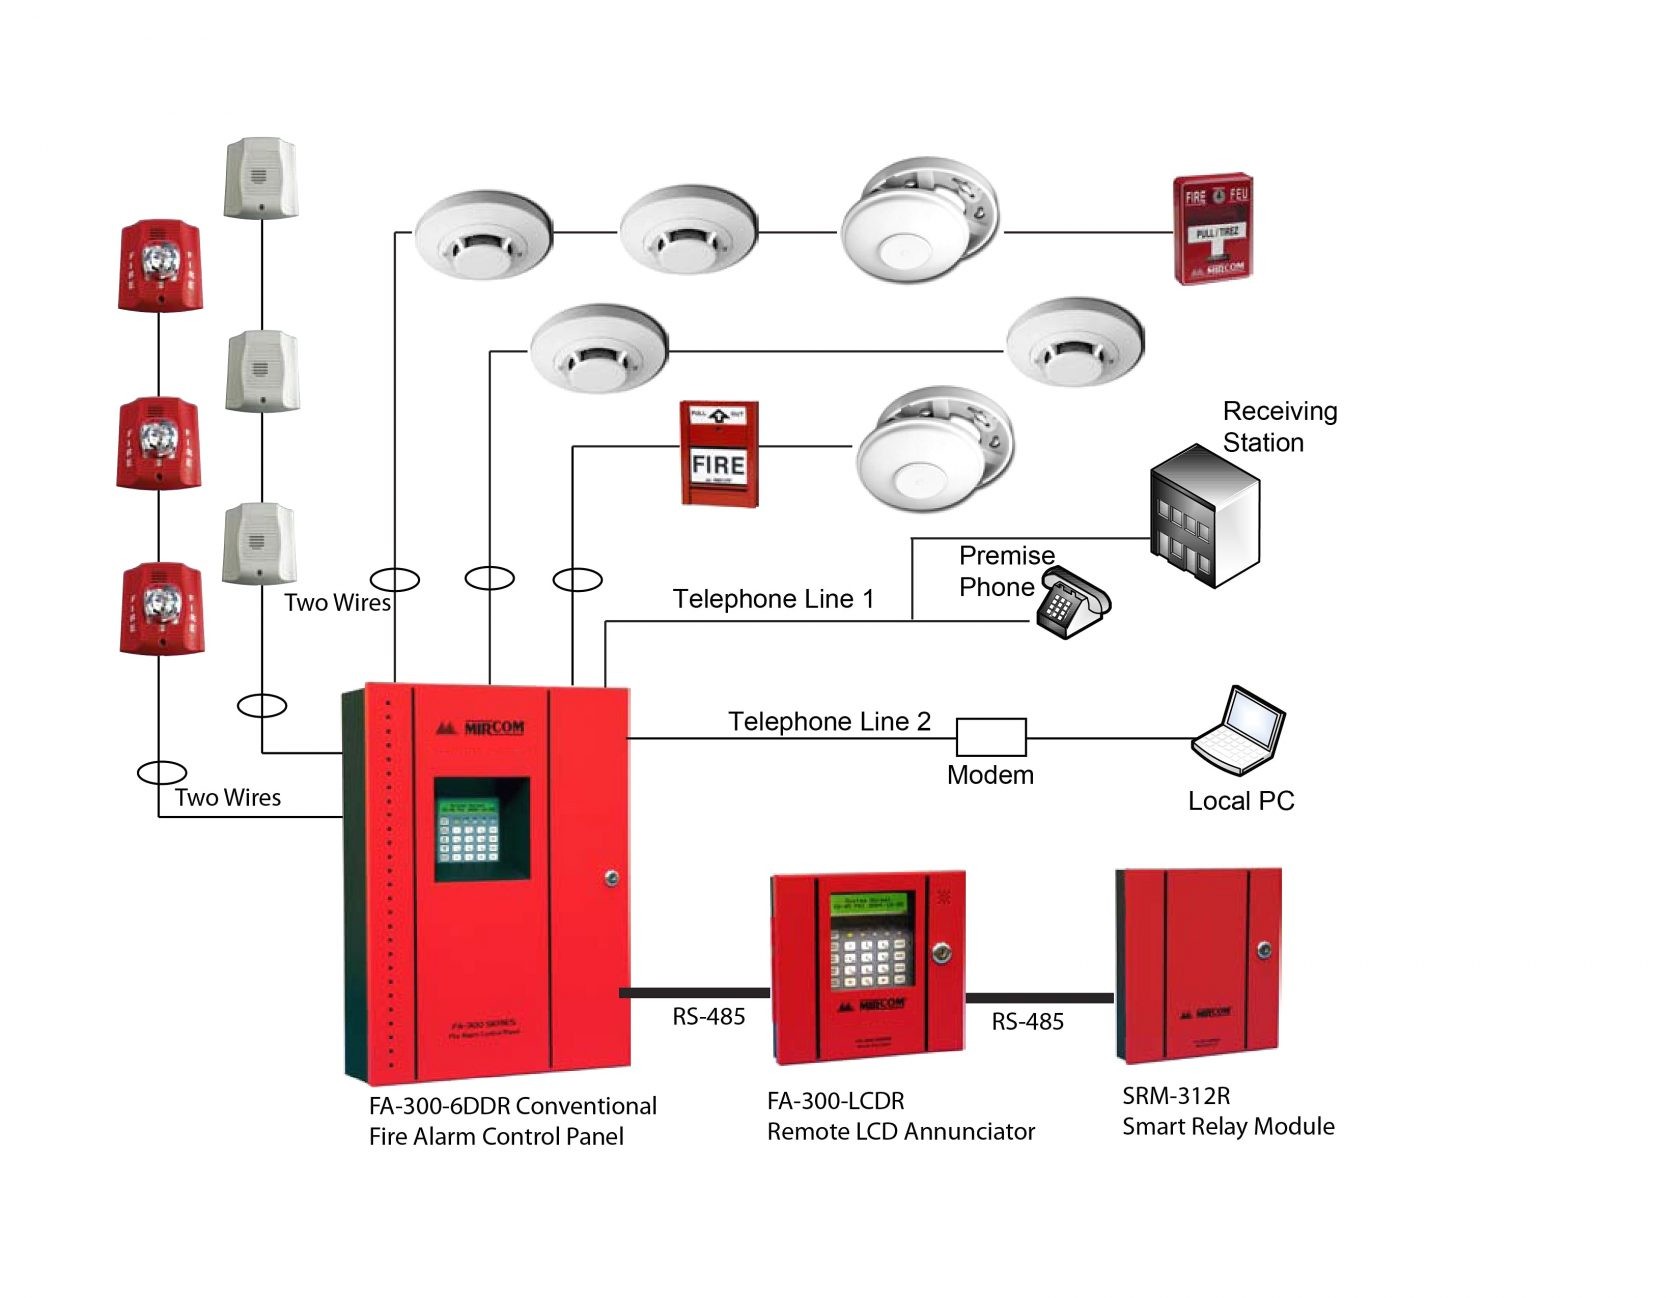 Wiring Diagram for Fire Alarm System Fire Alarm Addressable System Wiring Diagram Pdf Inspiration In Of Wiring Diagram for Fire Alarm System